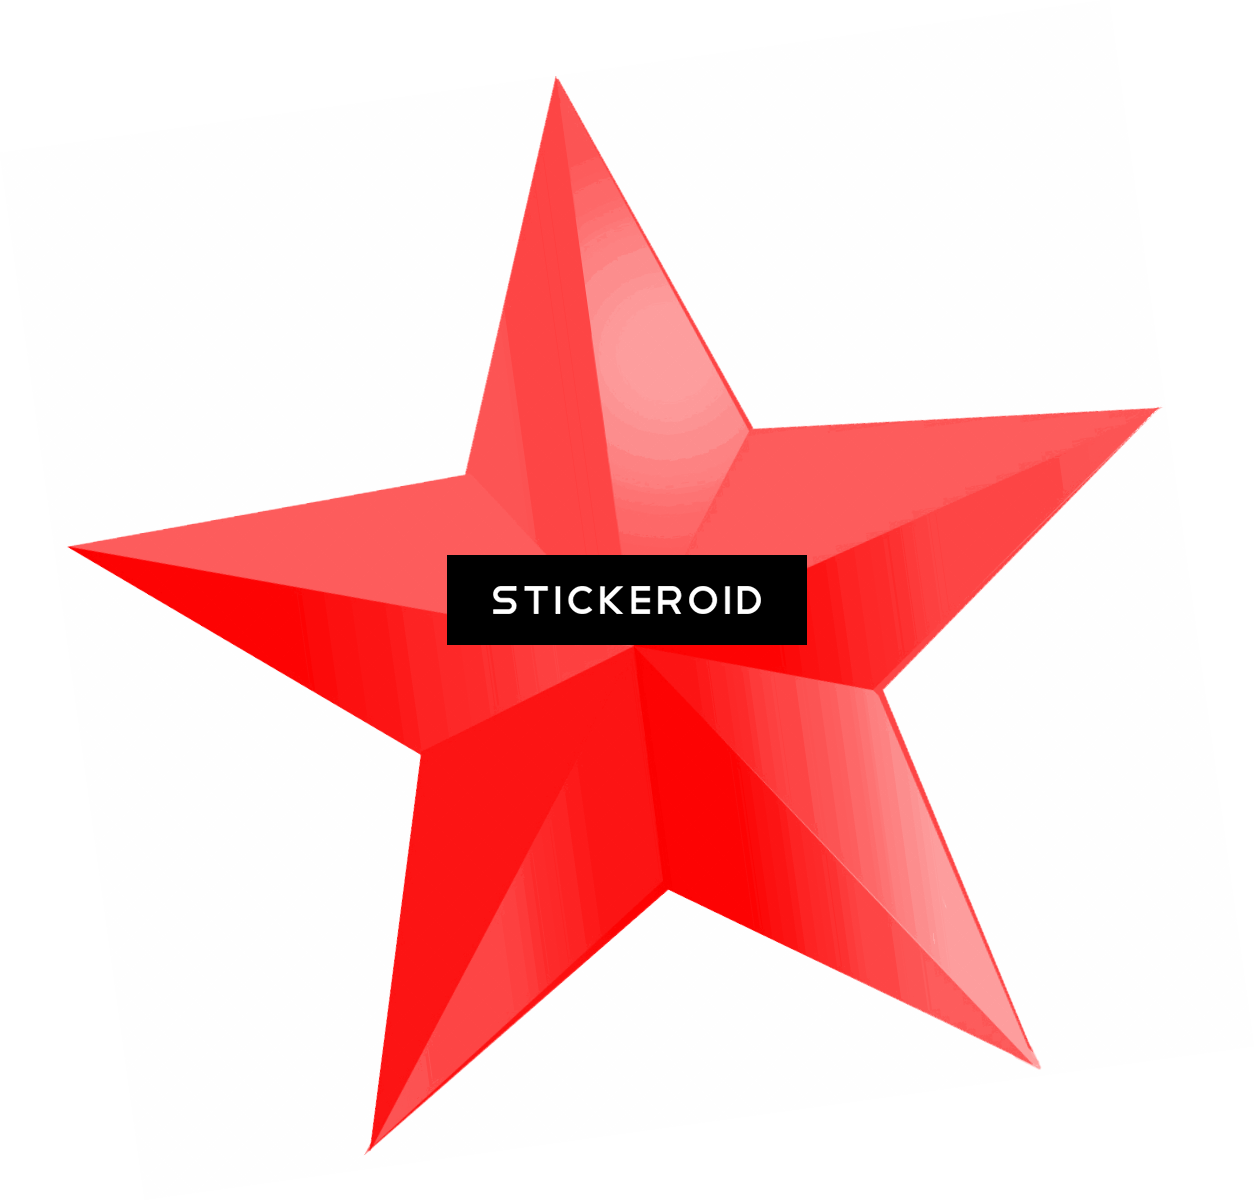 Soviet Red Star Logo - Load20180523 Logo Pngimg004 Red Soviet Star Union.PNG